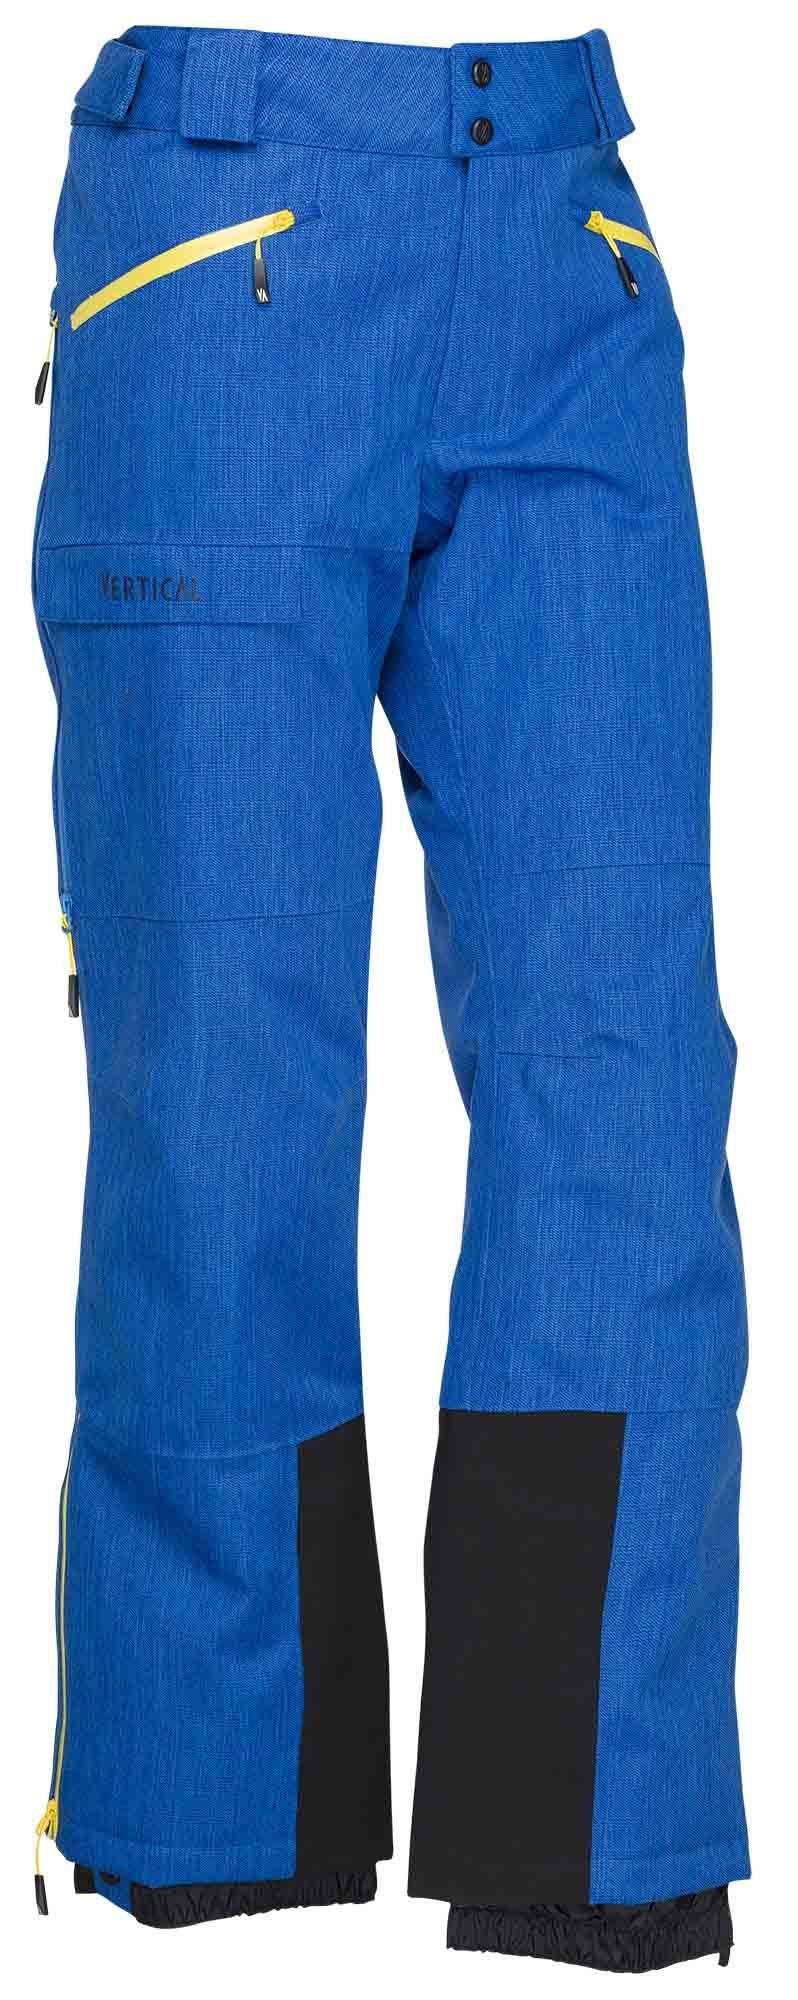 Pantalon de ski Mythic Insulated homme bleu